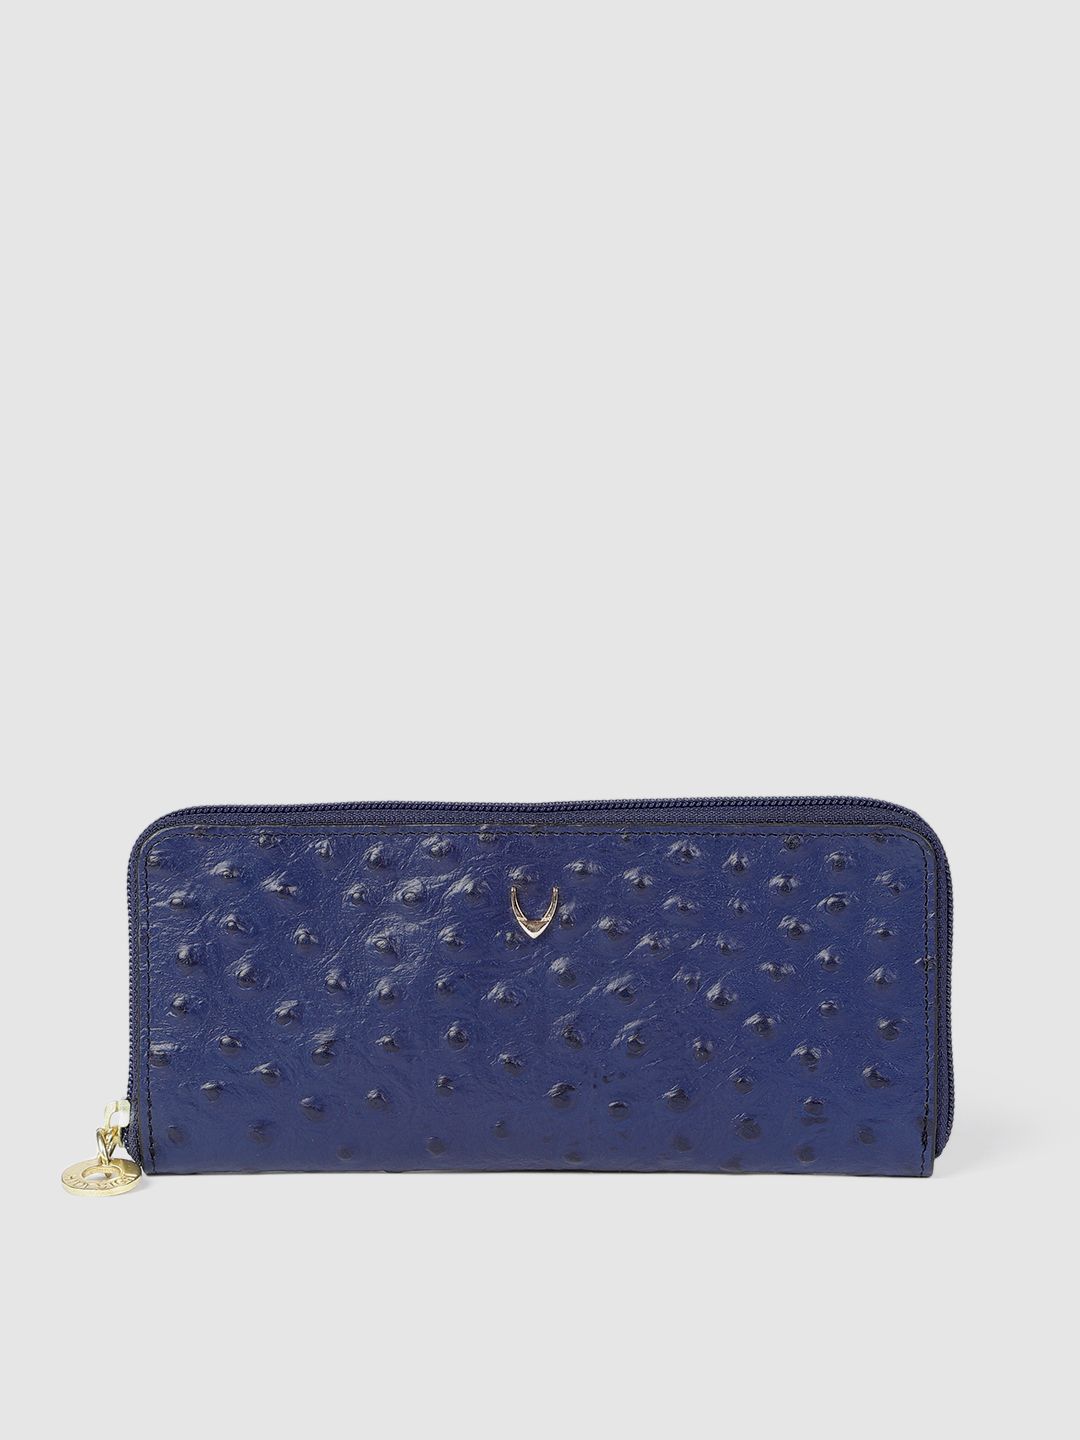 Hidesign Women Blue Textured EE MOROCCO W2 Leather Zip Around Wallet Price in India